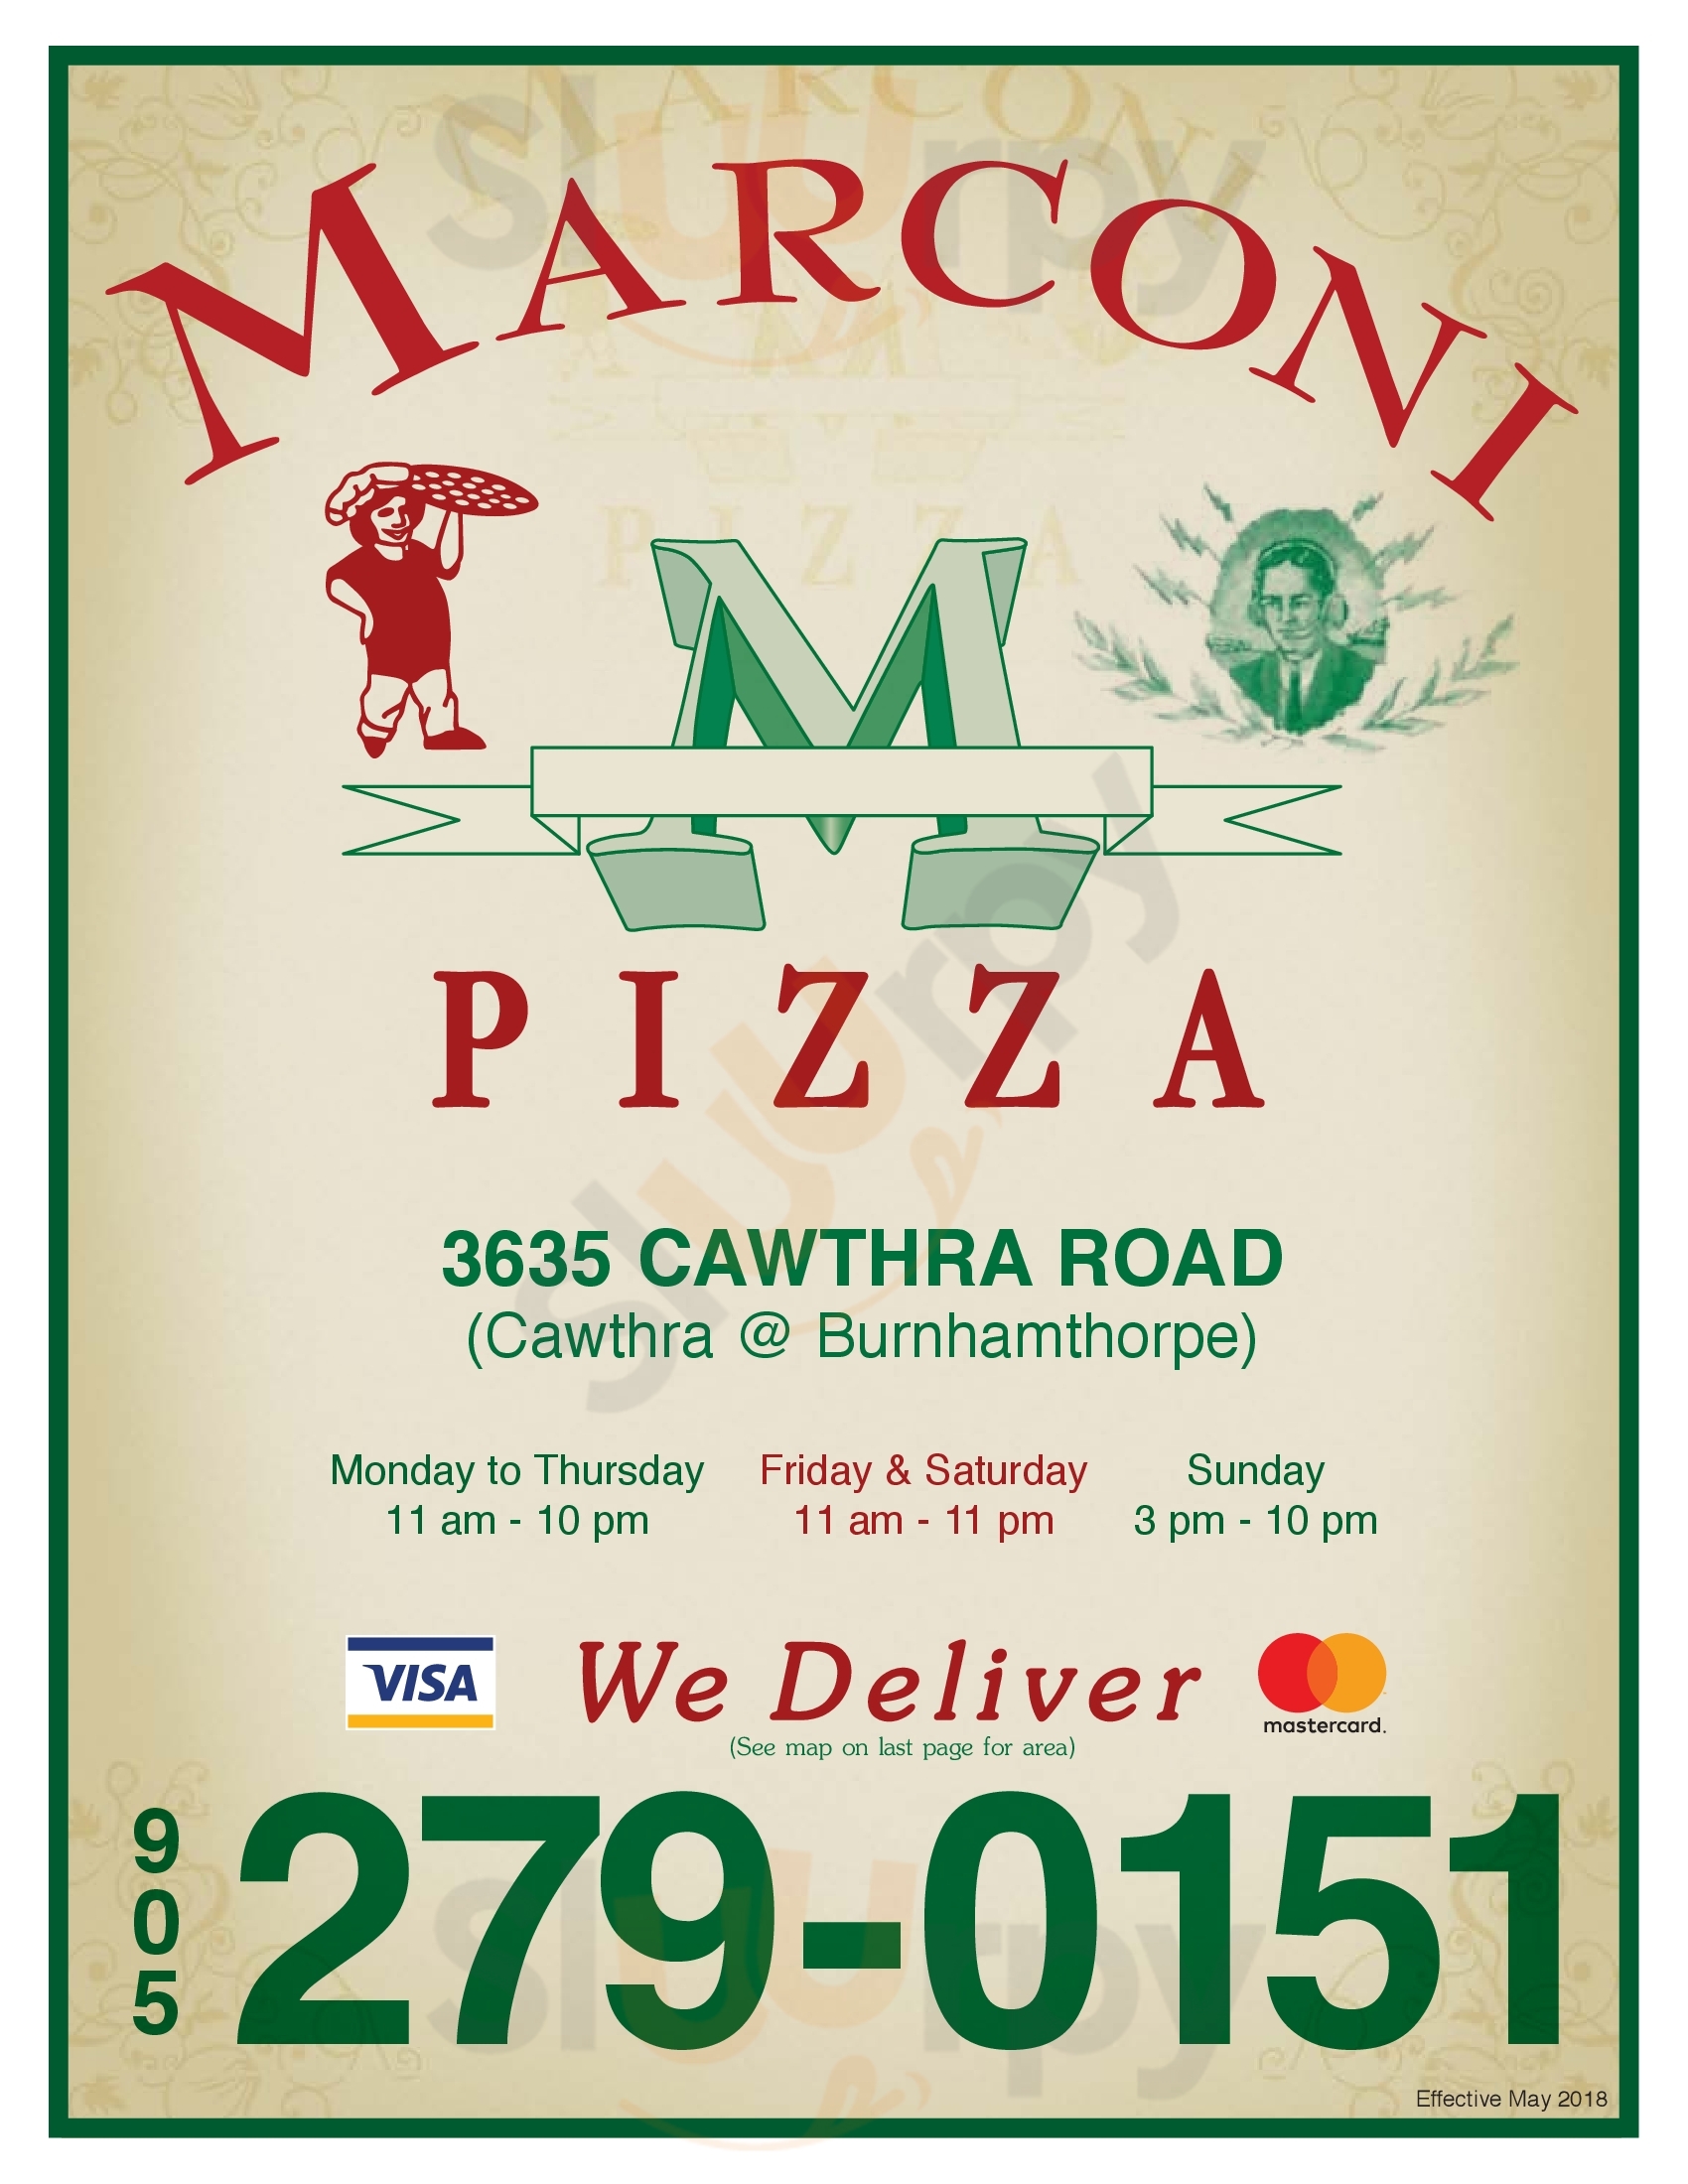 Marconi Pizza Mississauga Menu - 1